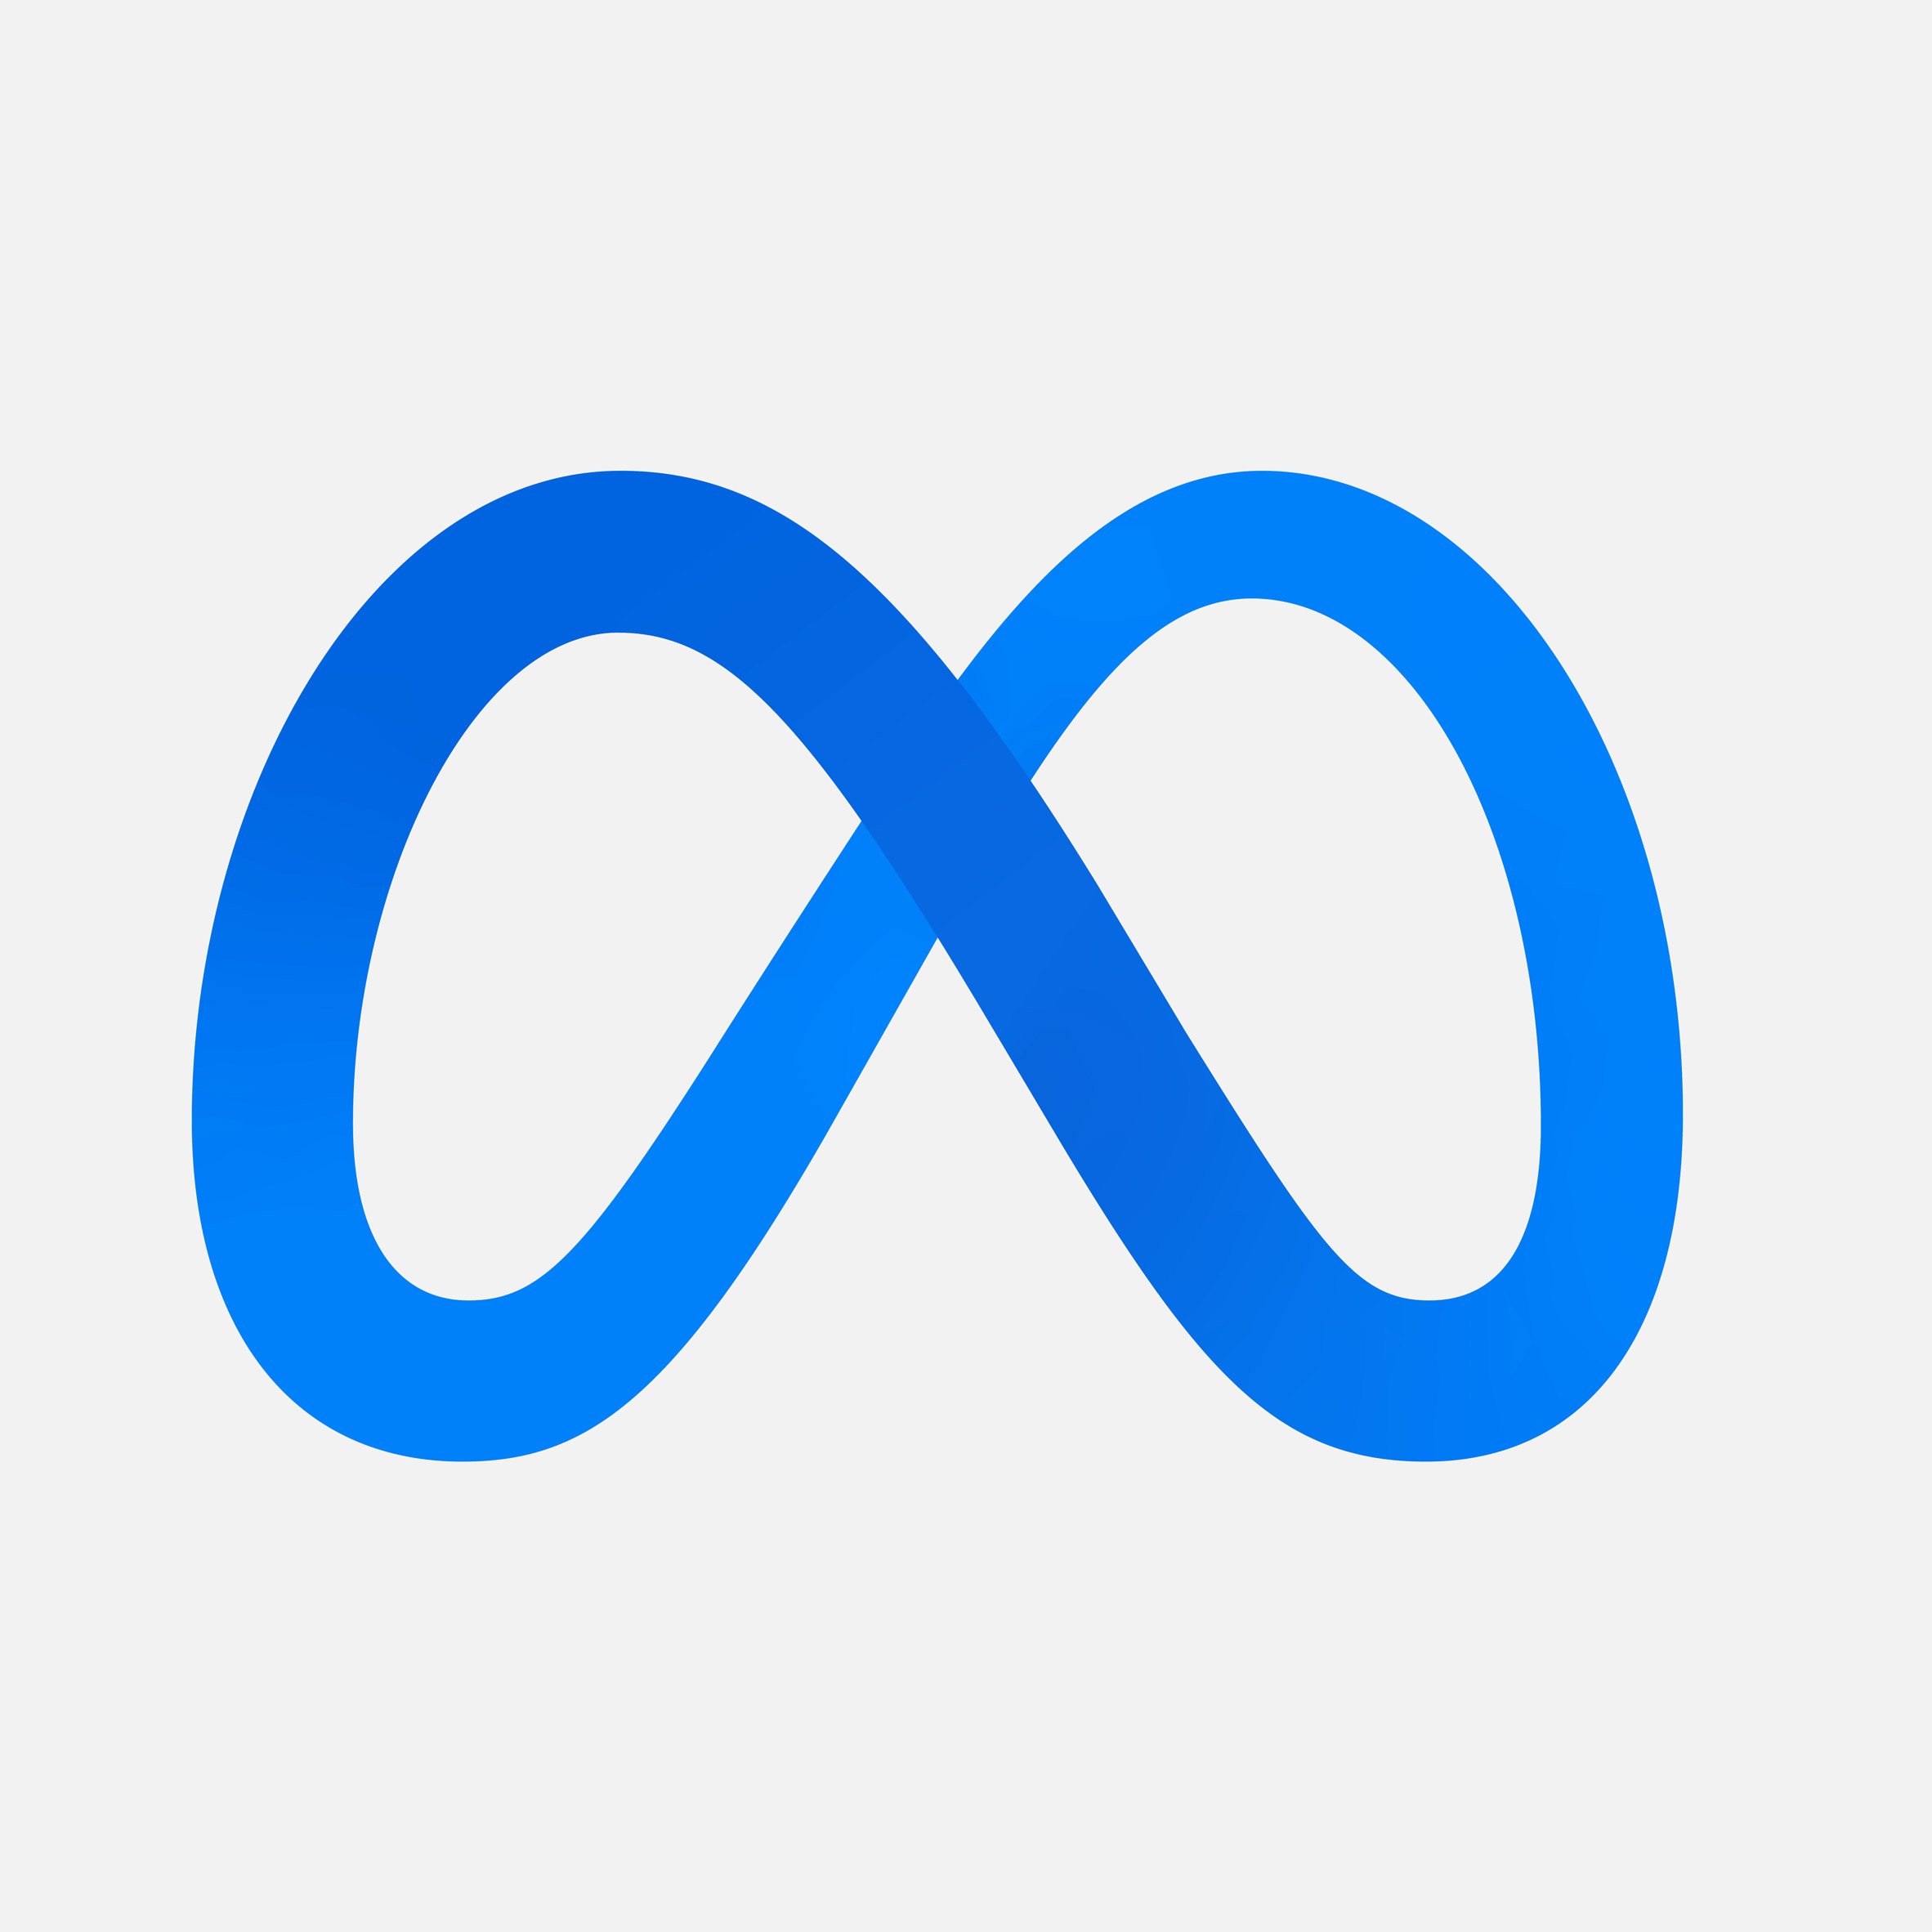 Blue infinity logo for Meta as featured in Dezeen's metaverse design roundup